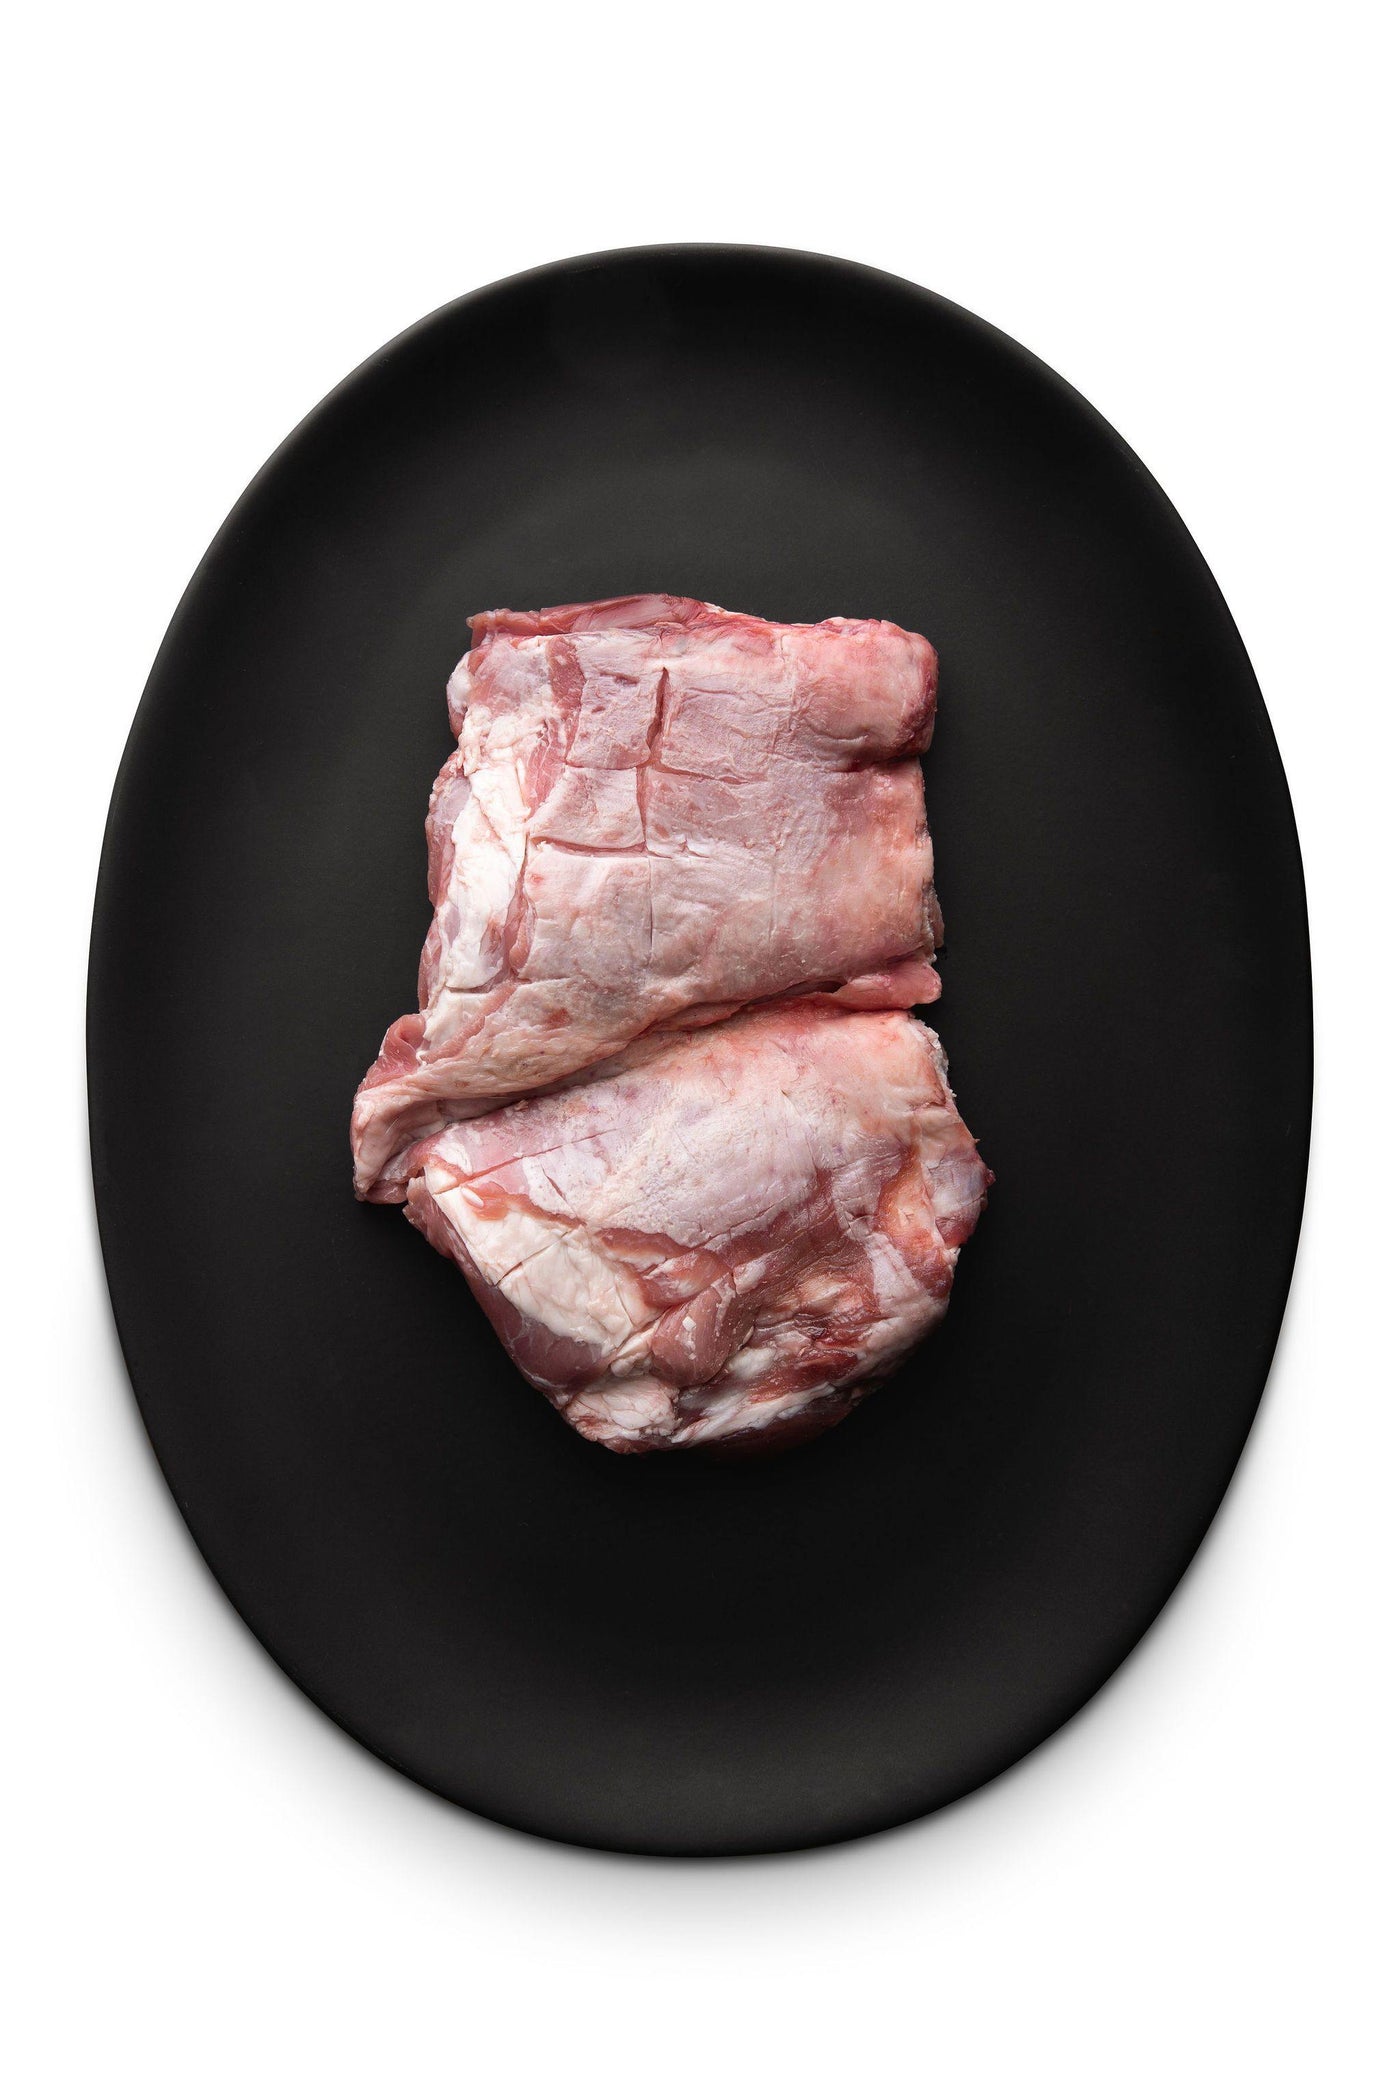 deboned lamb neck steak - Tjopshop Carnarvon